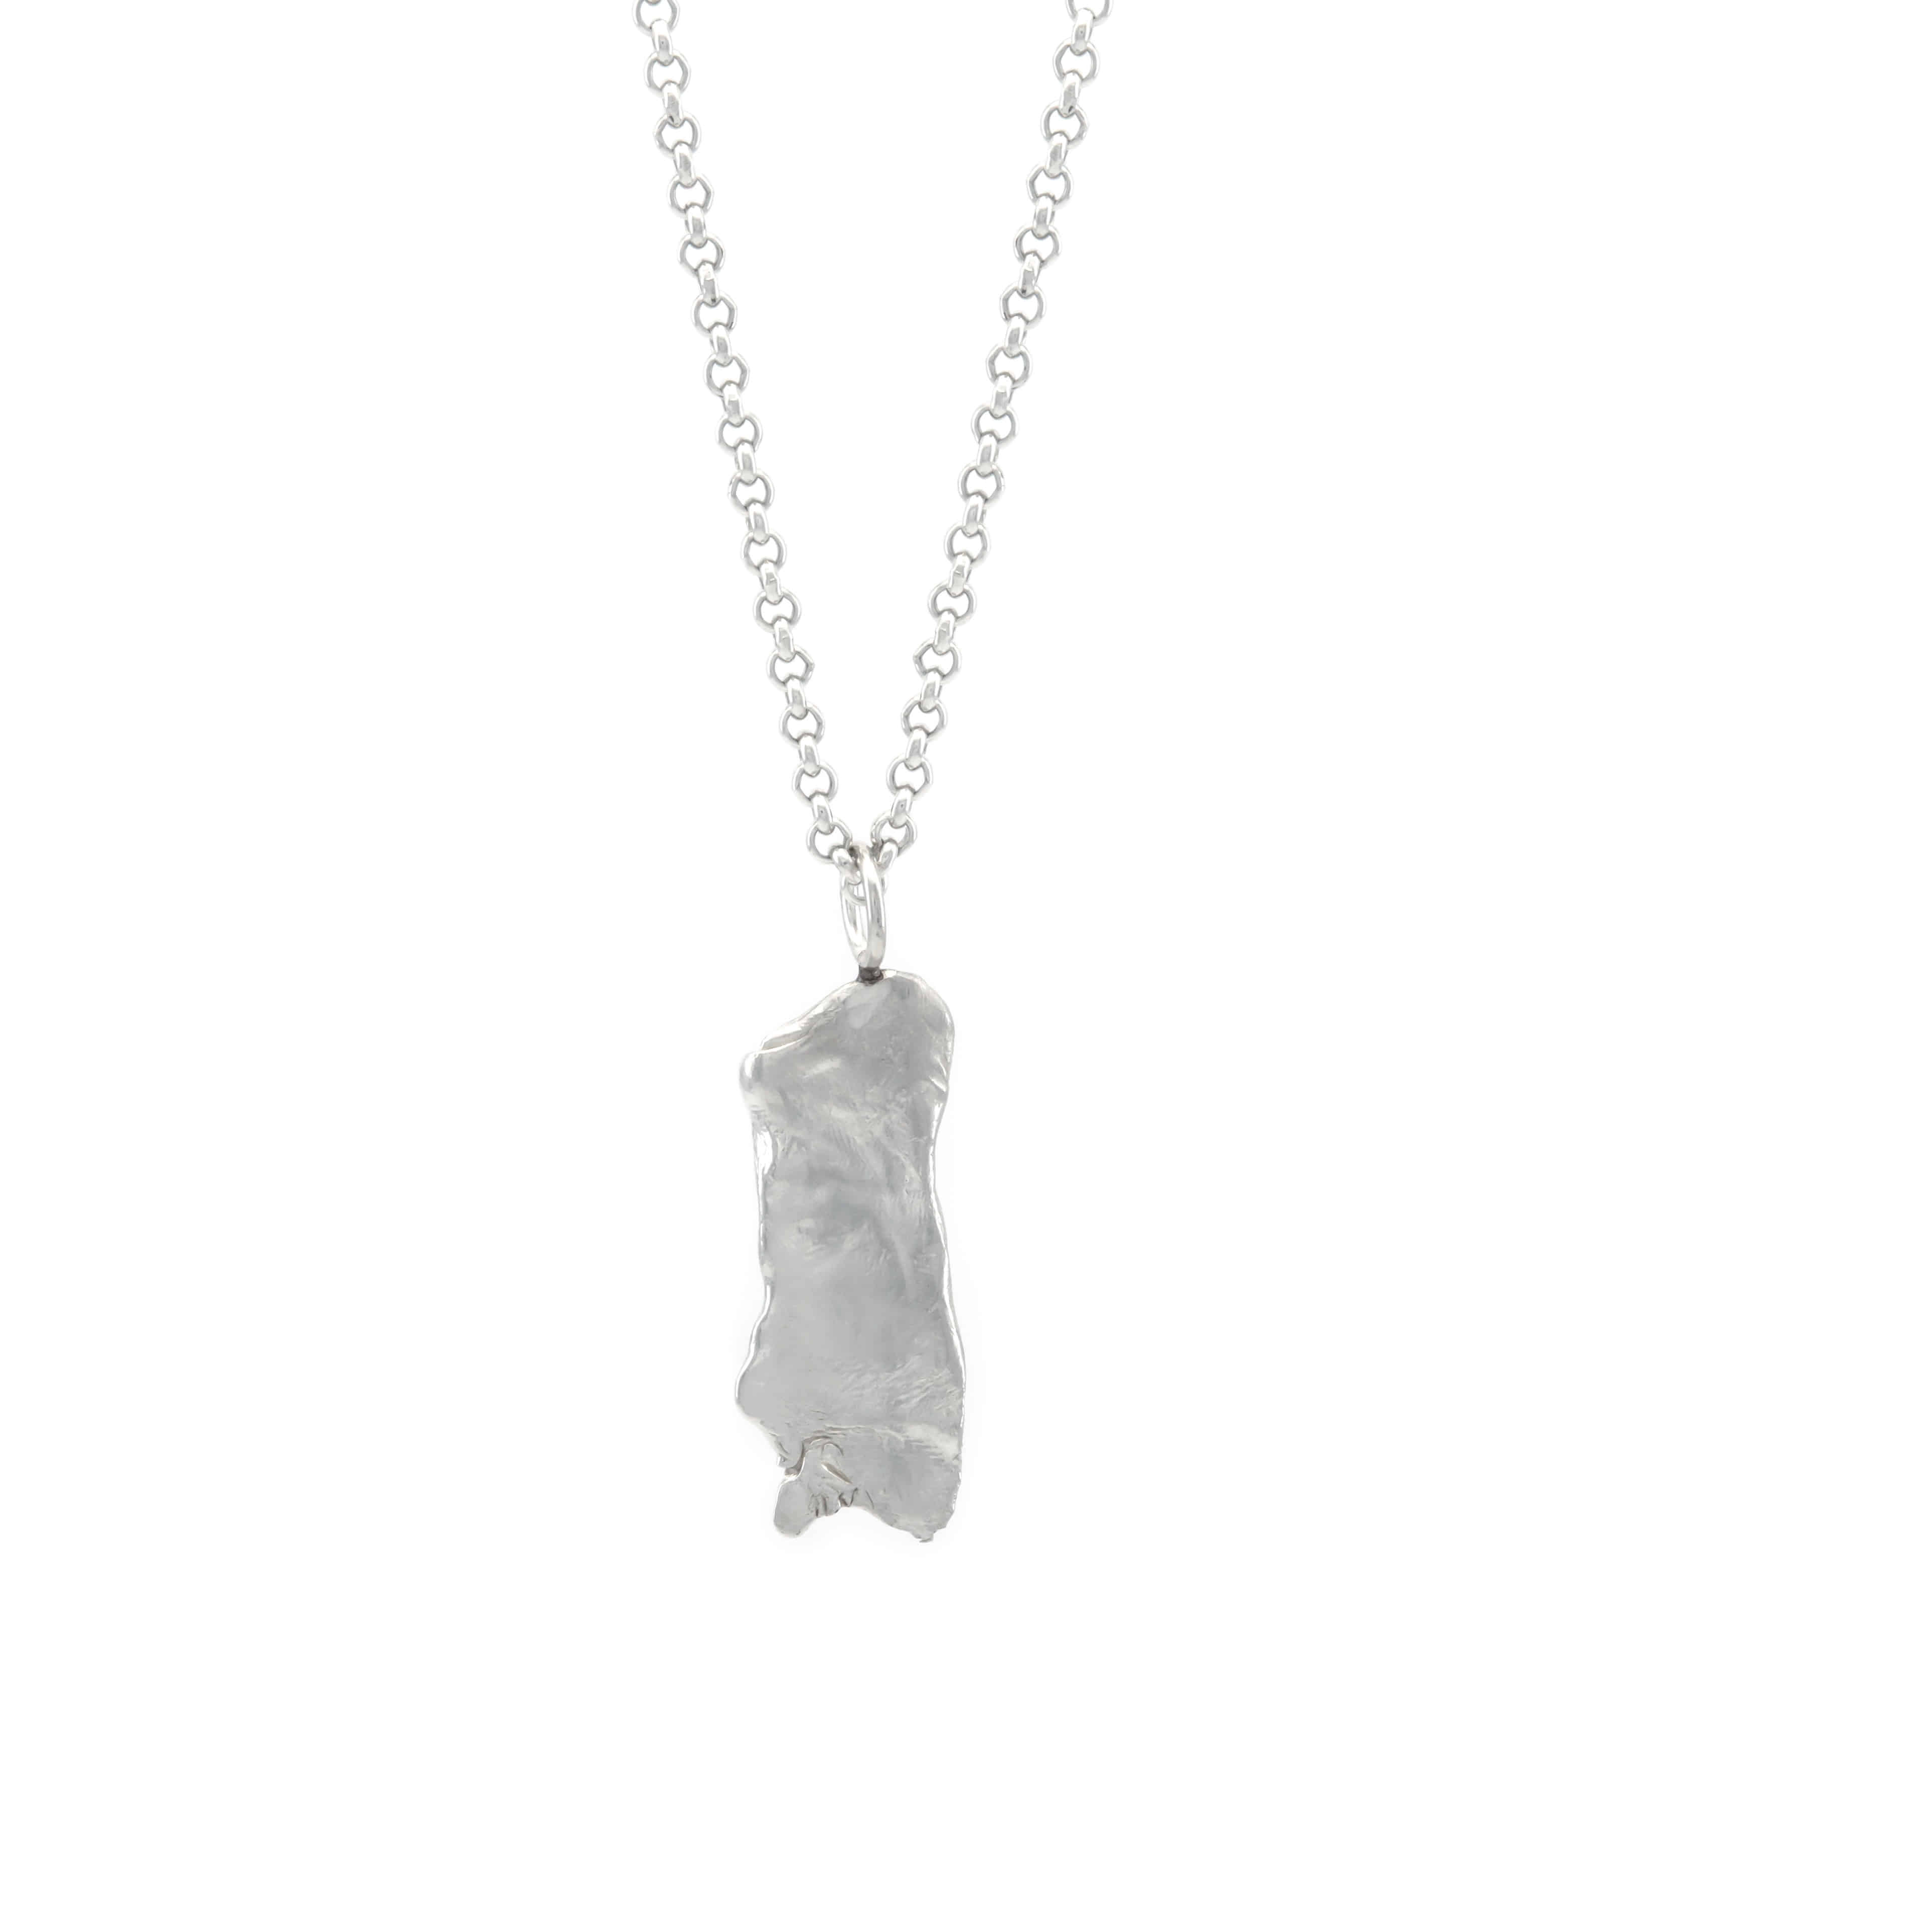 quartz necklace_big lump